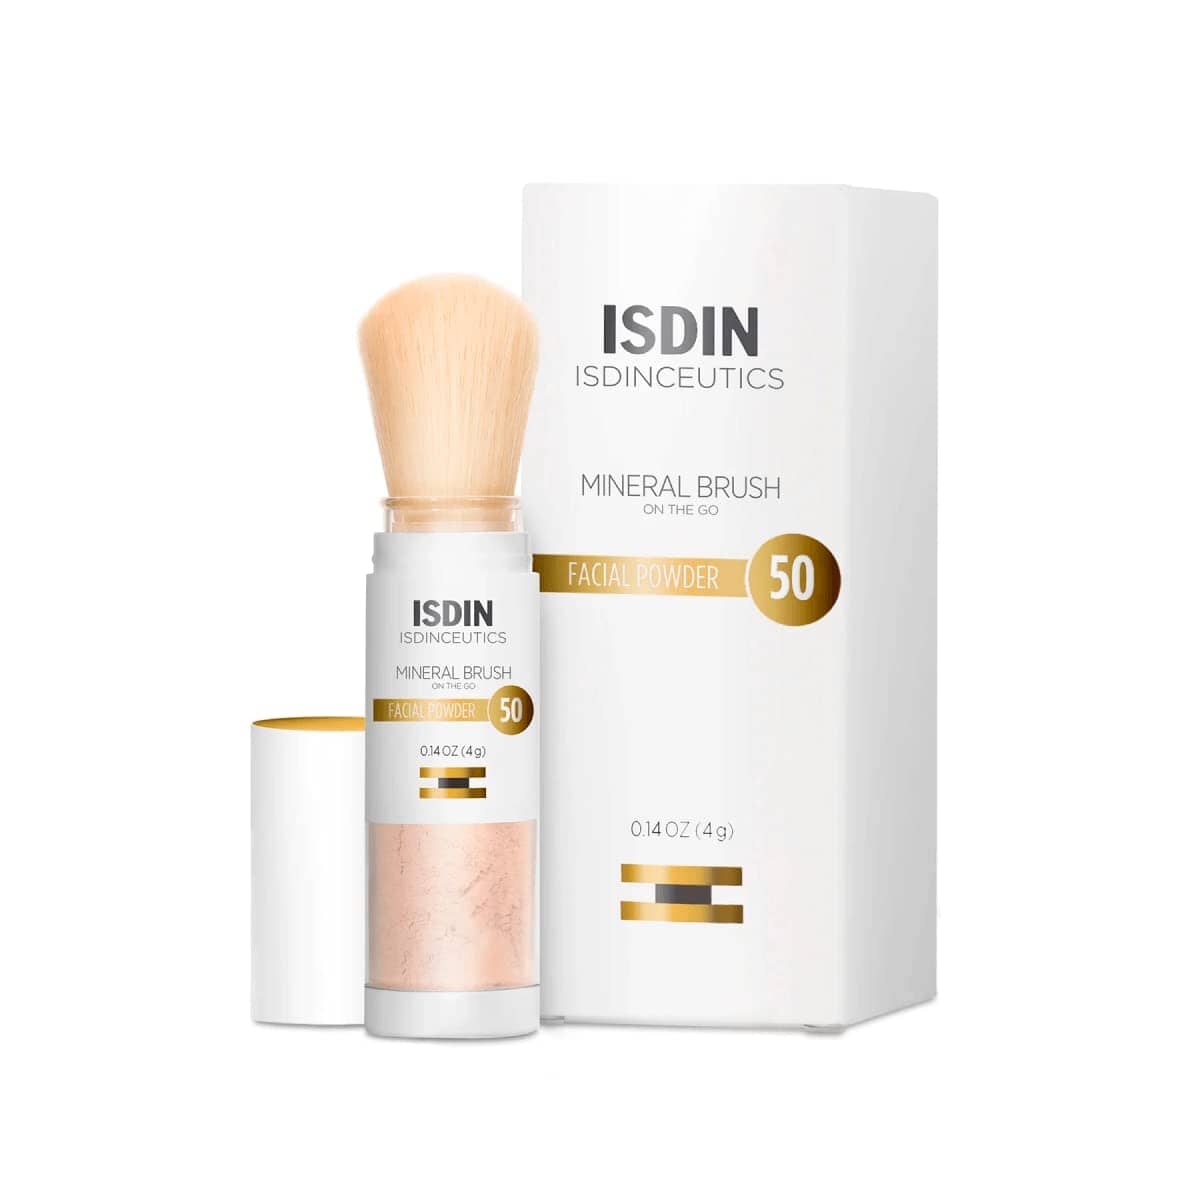 ISDIN Isdinceutics Mineral Brush Facial Powder SPF 50 ISDIN 0.14 oz. Shop at Exclusive Beauty Club